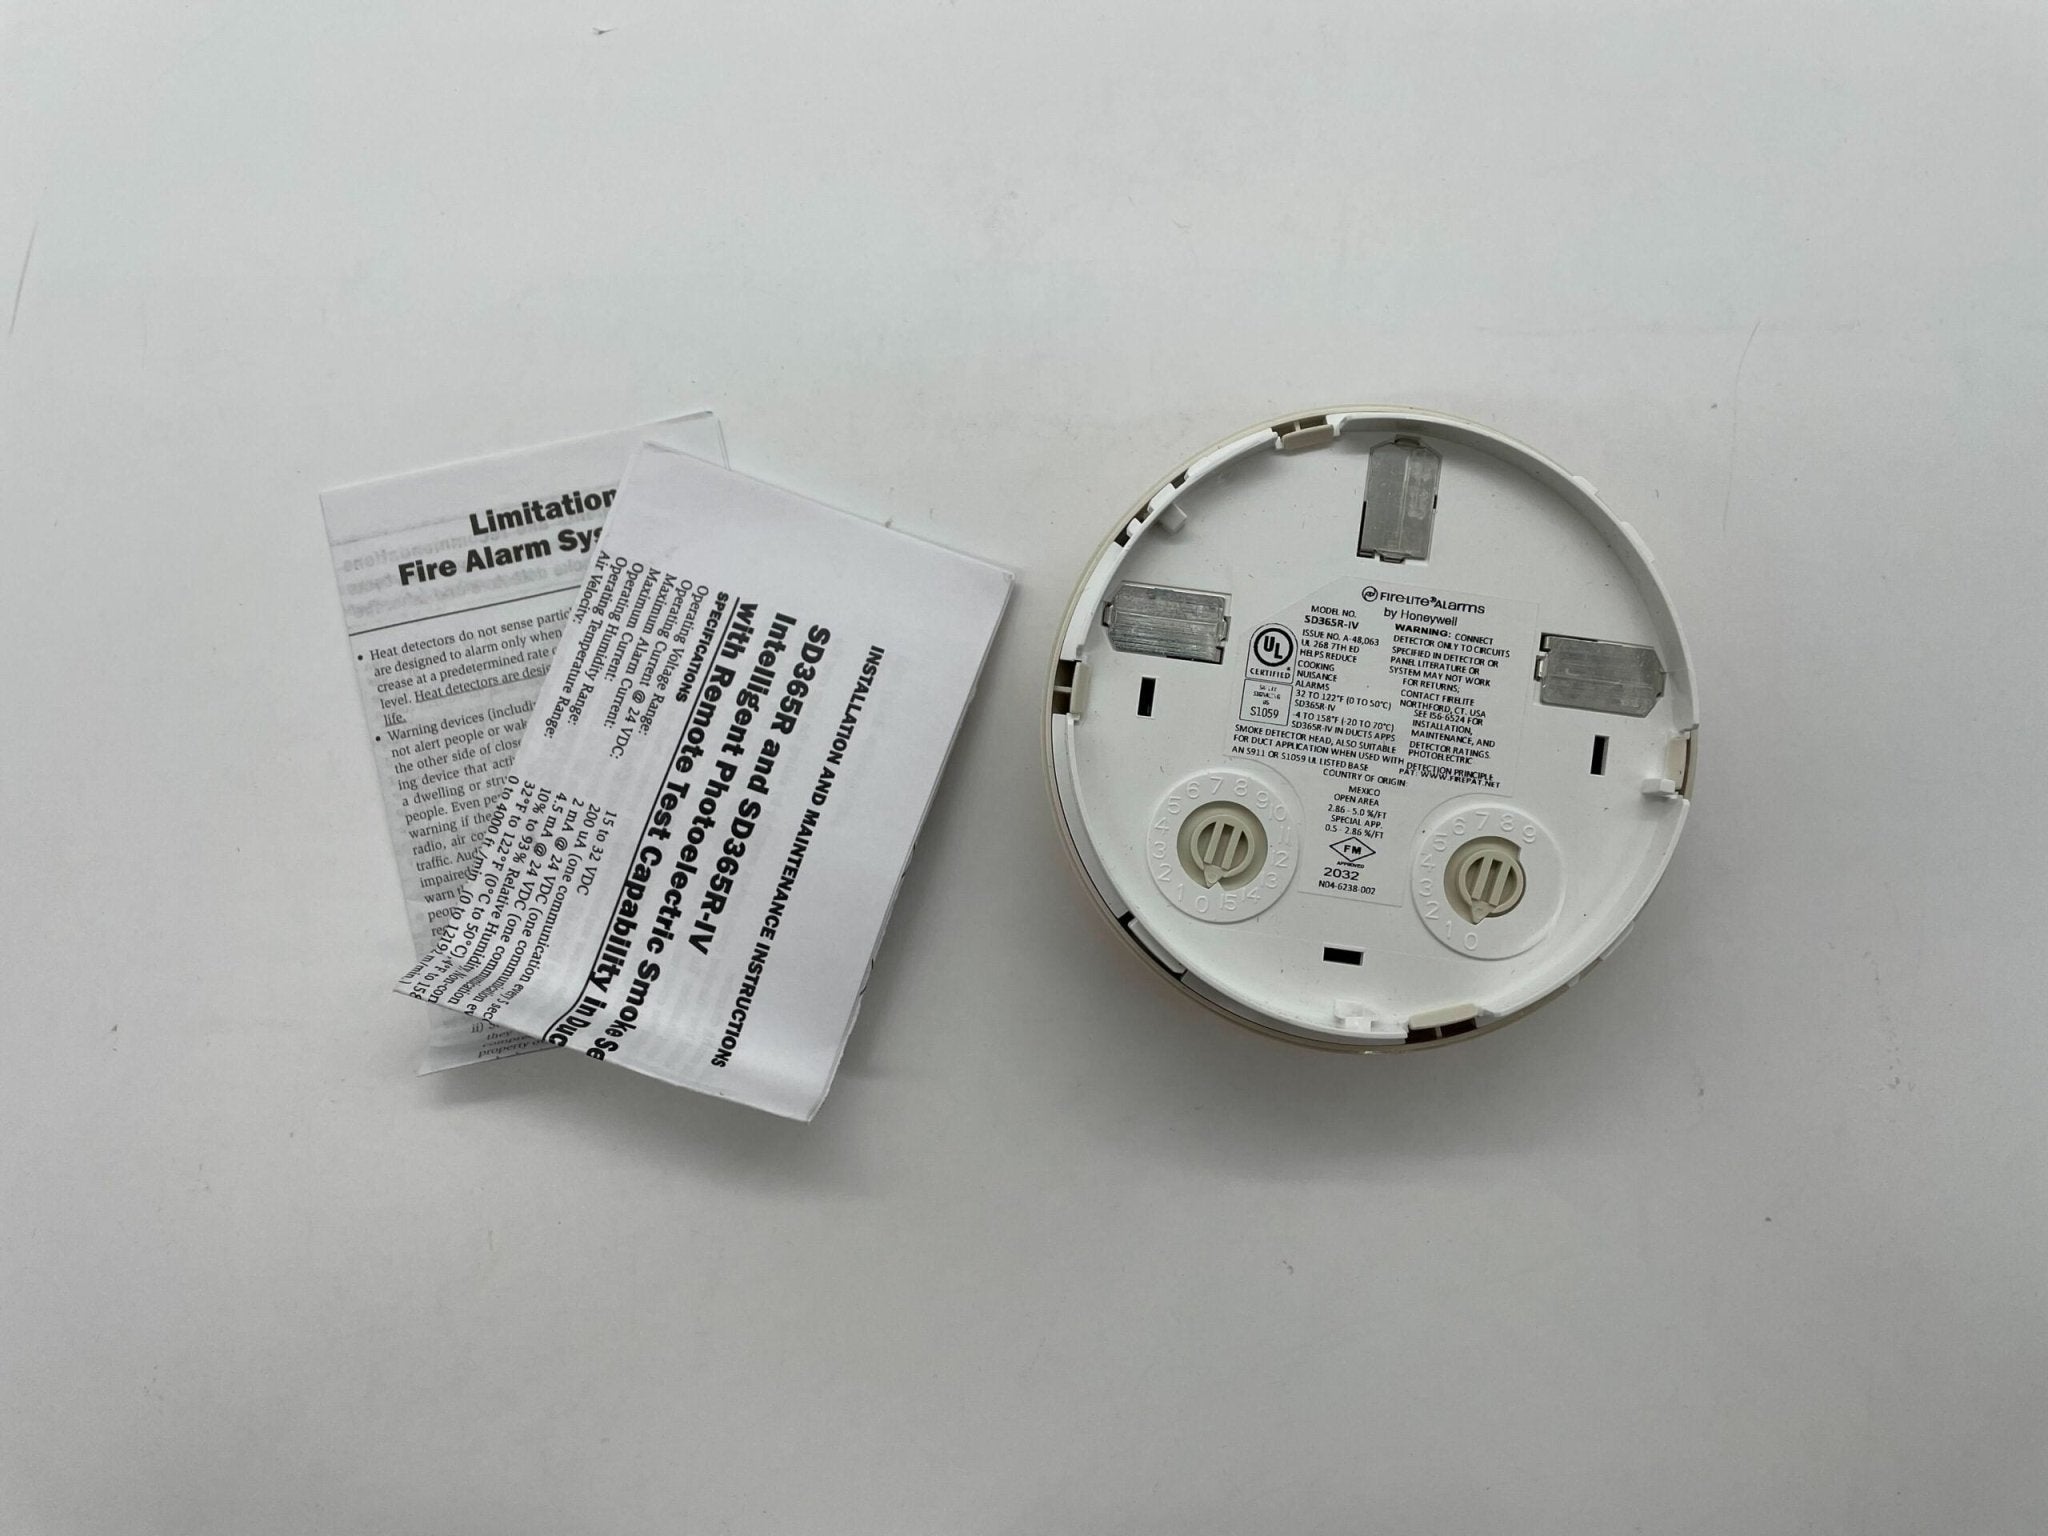 Firelite SD365R-IV - The Fire Alarm Supplier